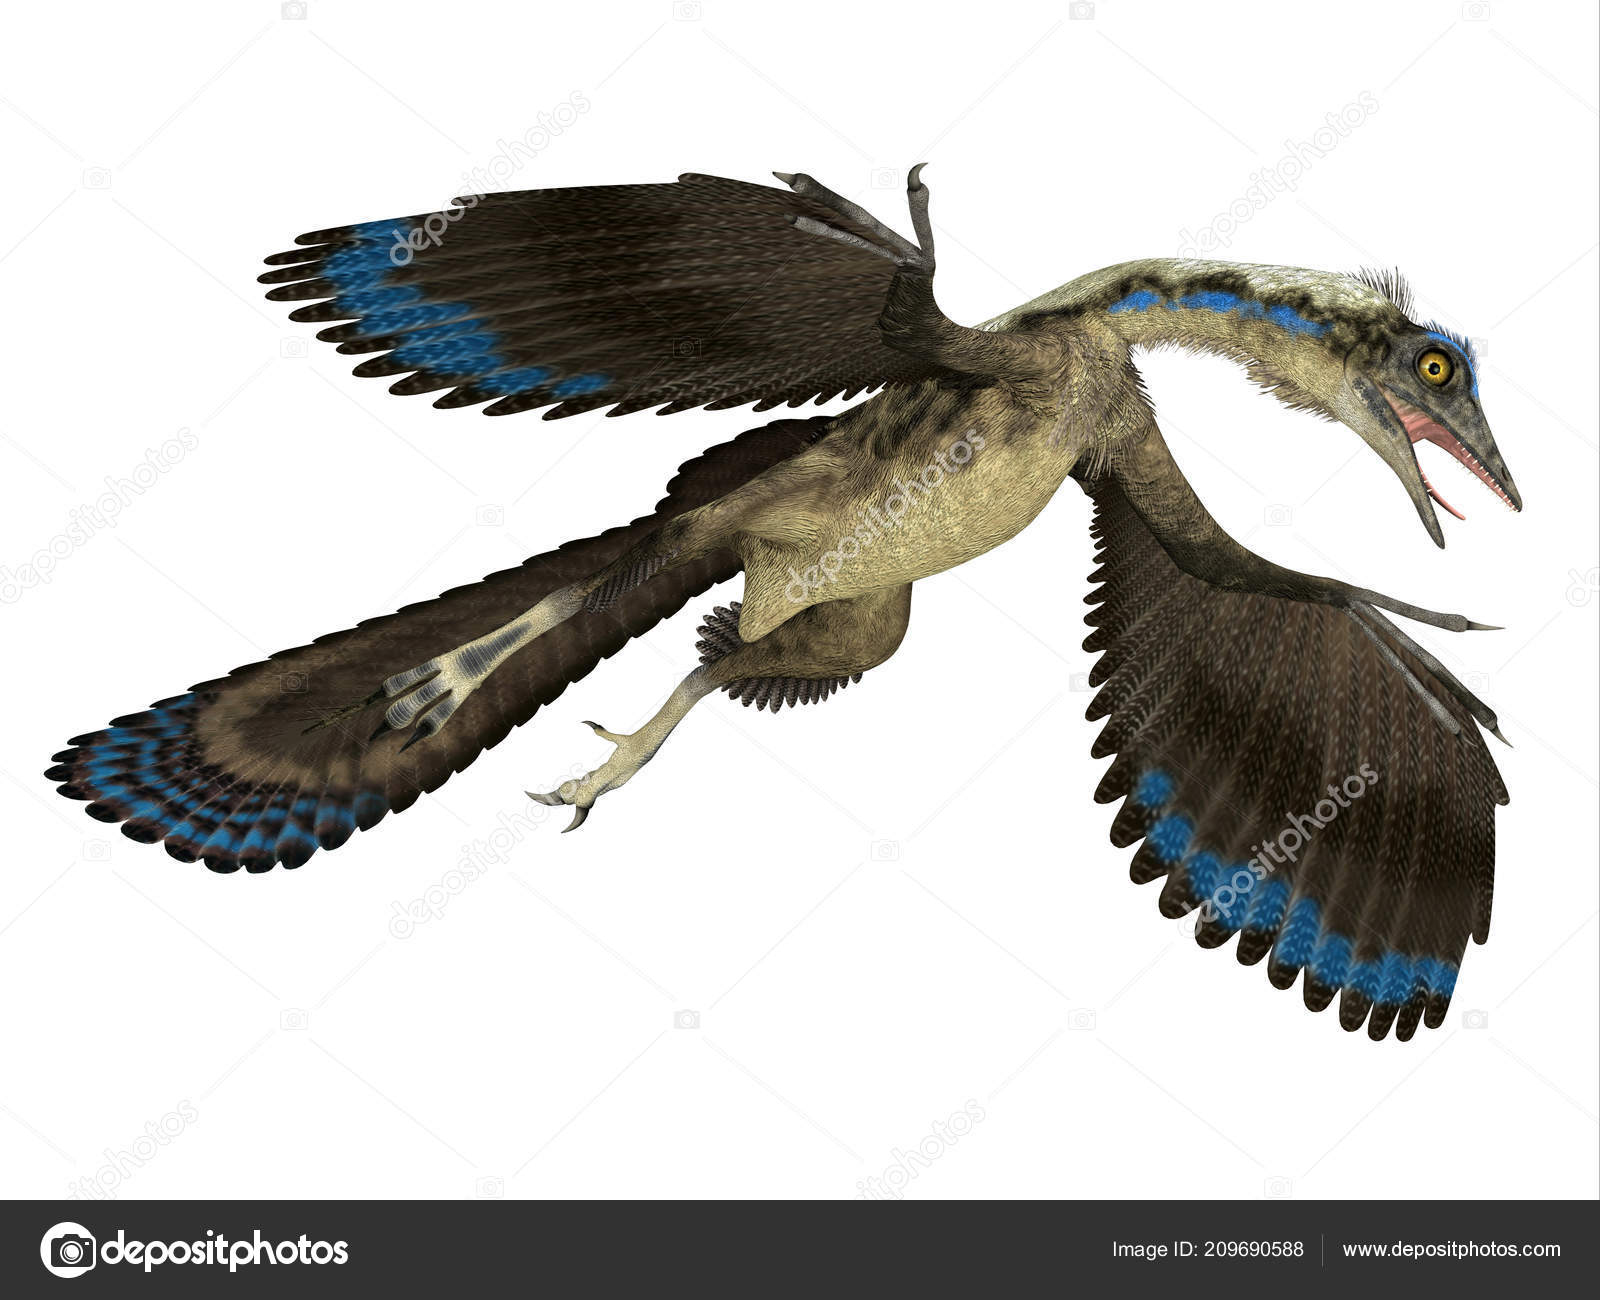 https://st4.depositphotos.com/2569431/20969/i/1600/depositphotos_209690588-stock-photo-archaeopteryx-carnivorous-pterosaur-reptile-lived.jpg
